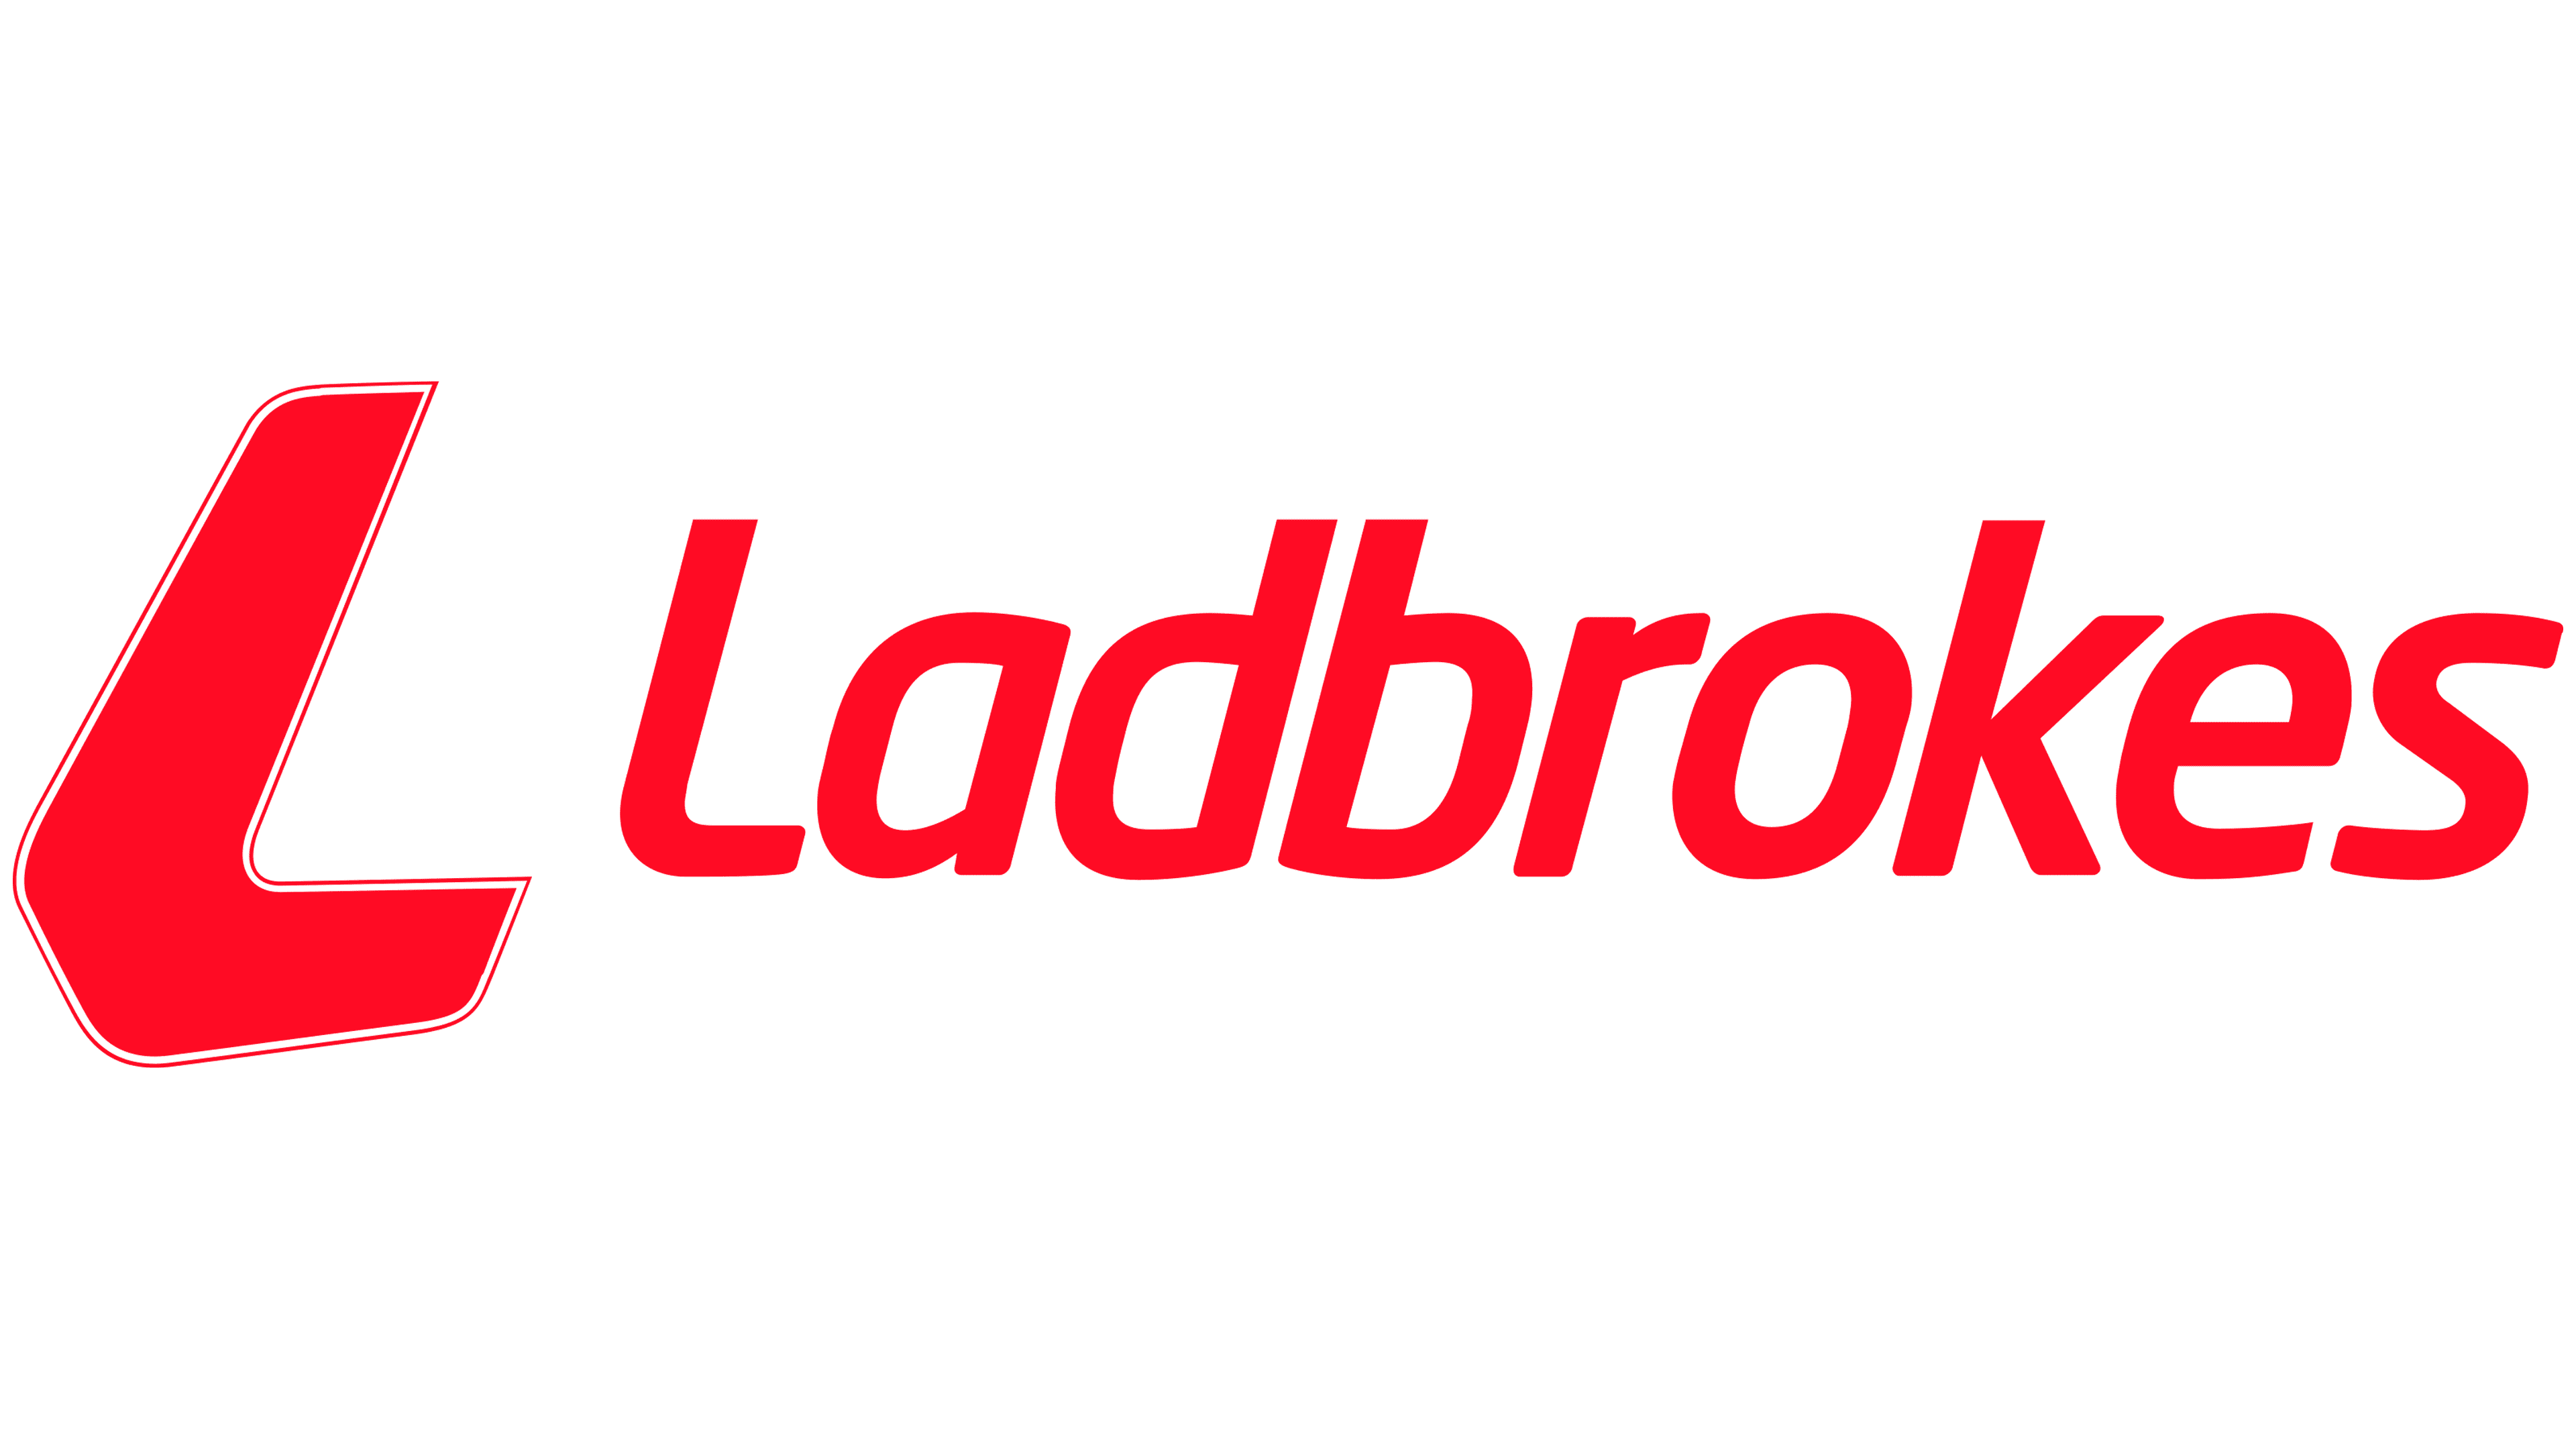 Ladbrokes Casino